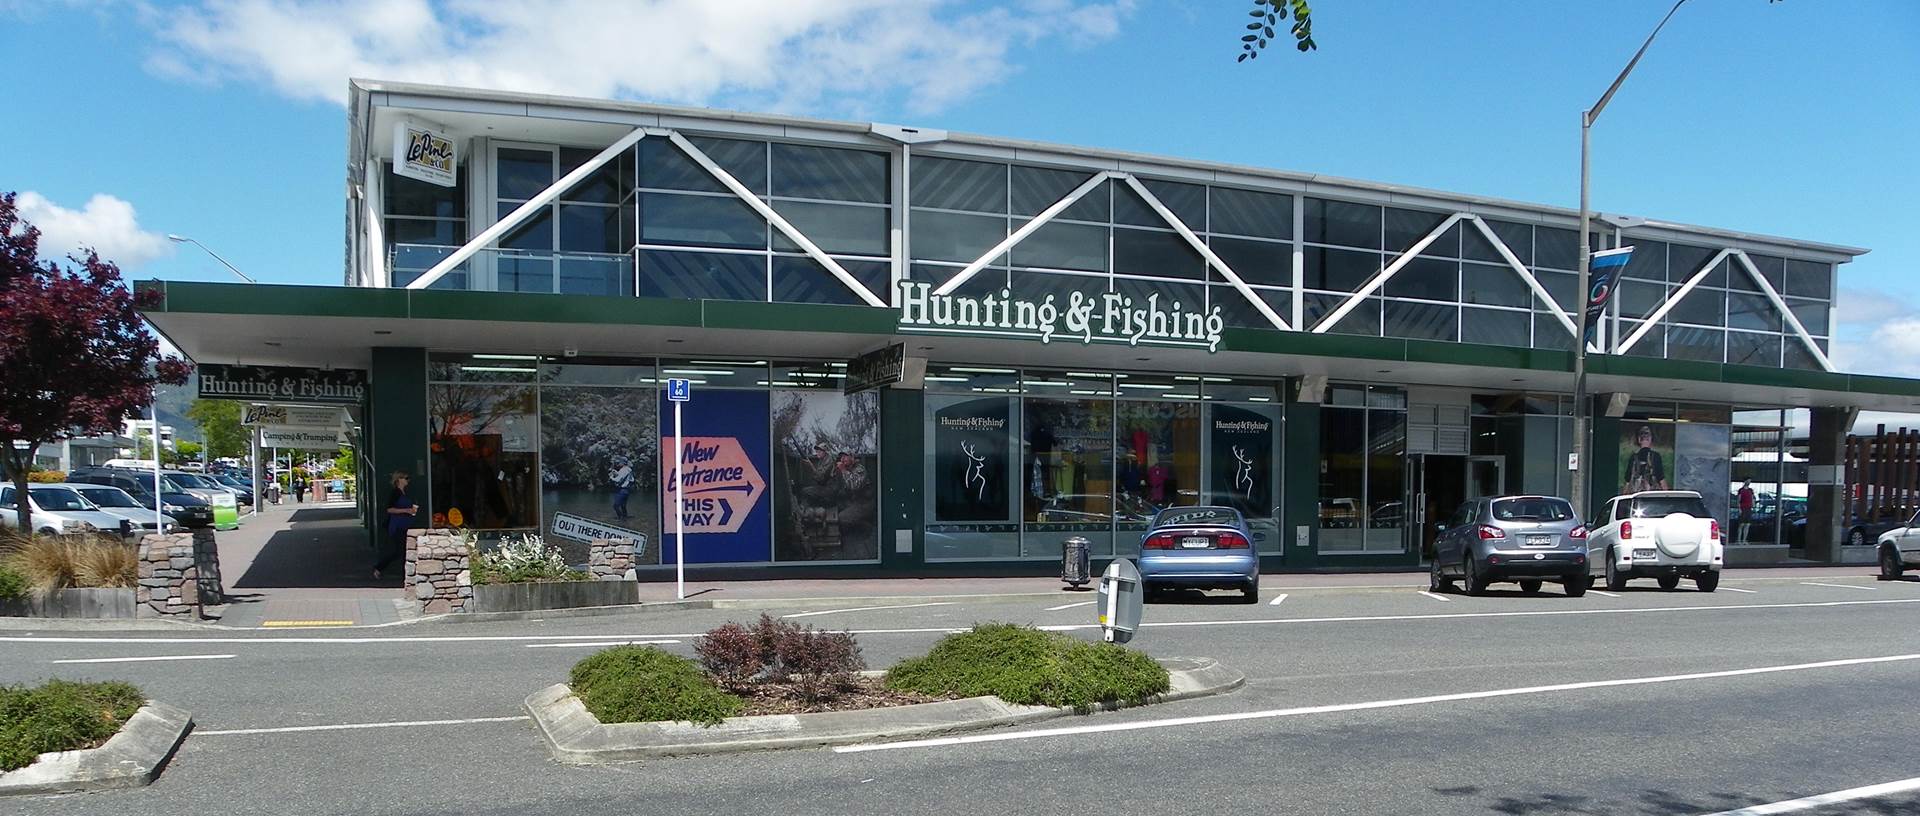 Hunting & Fishing New Zealand, Fly & Gun, Taupo - The Taupō new